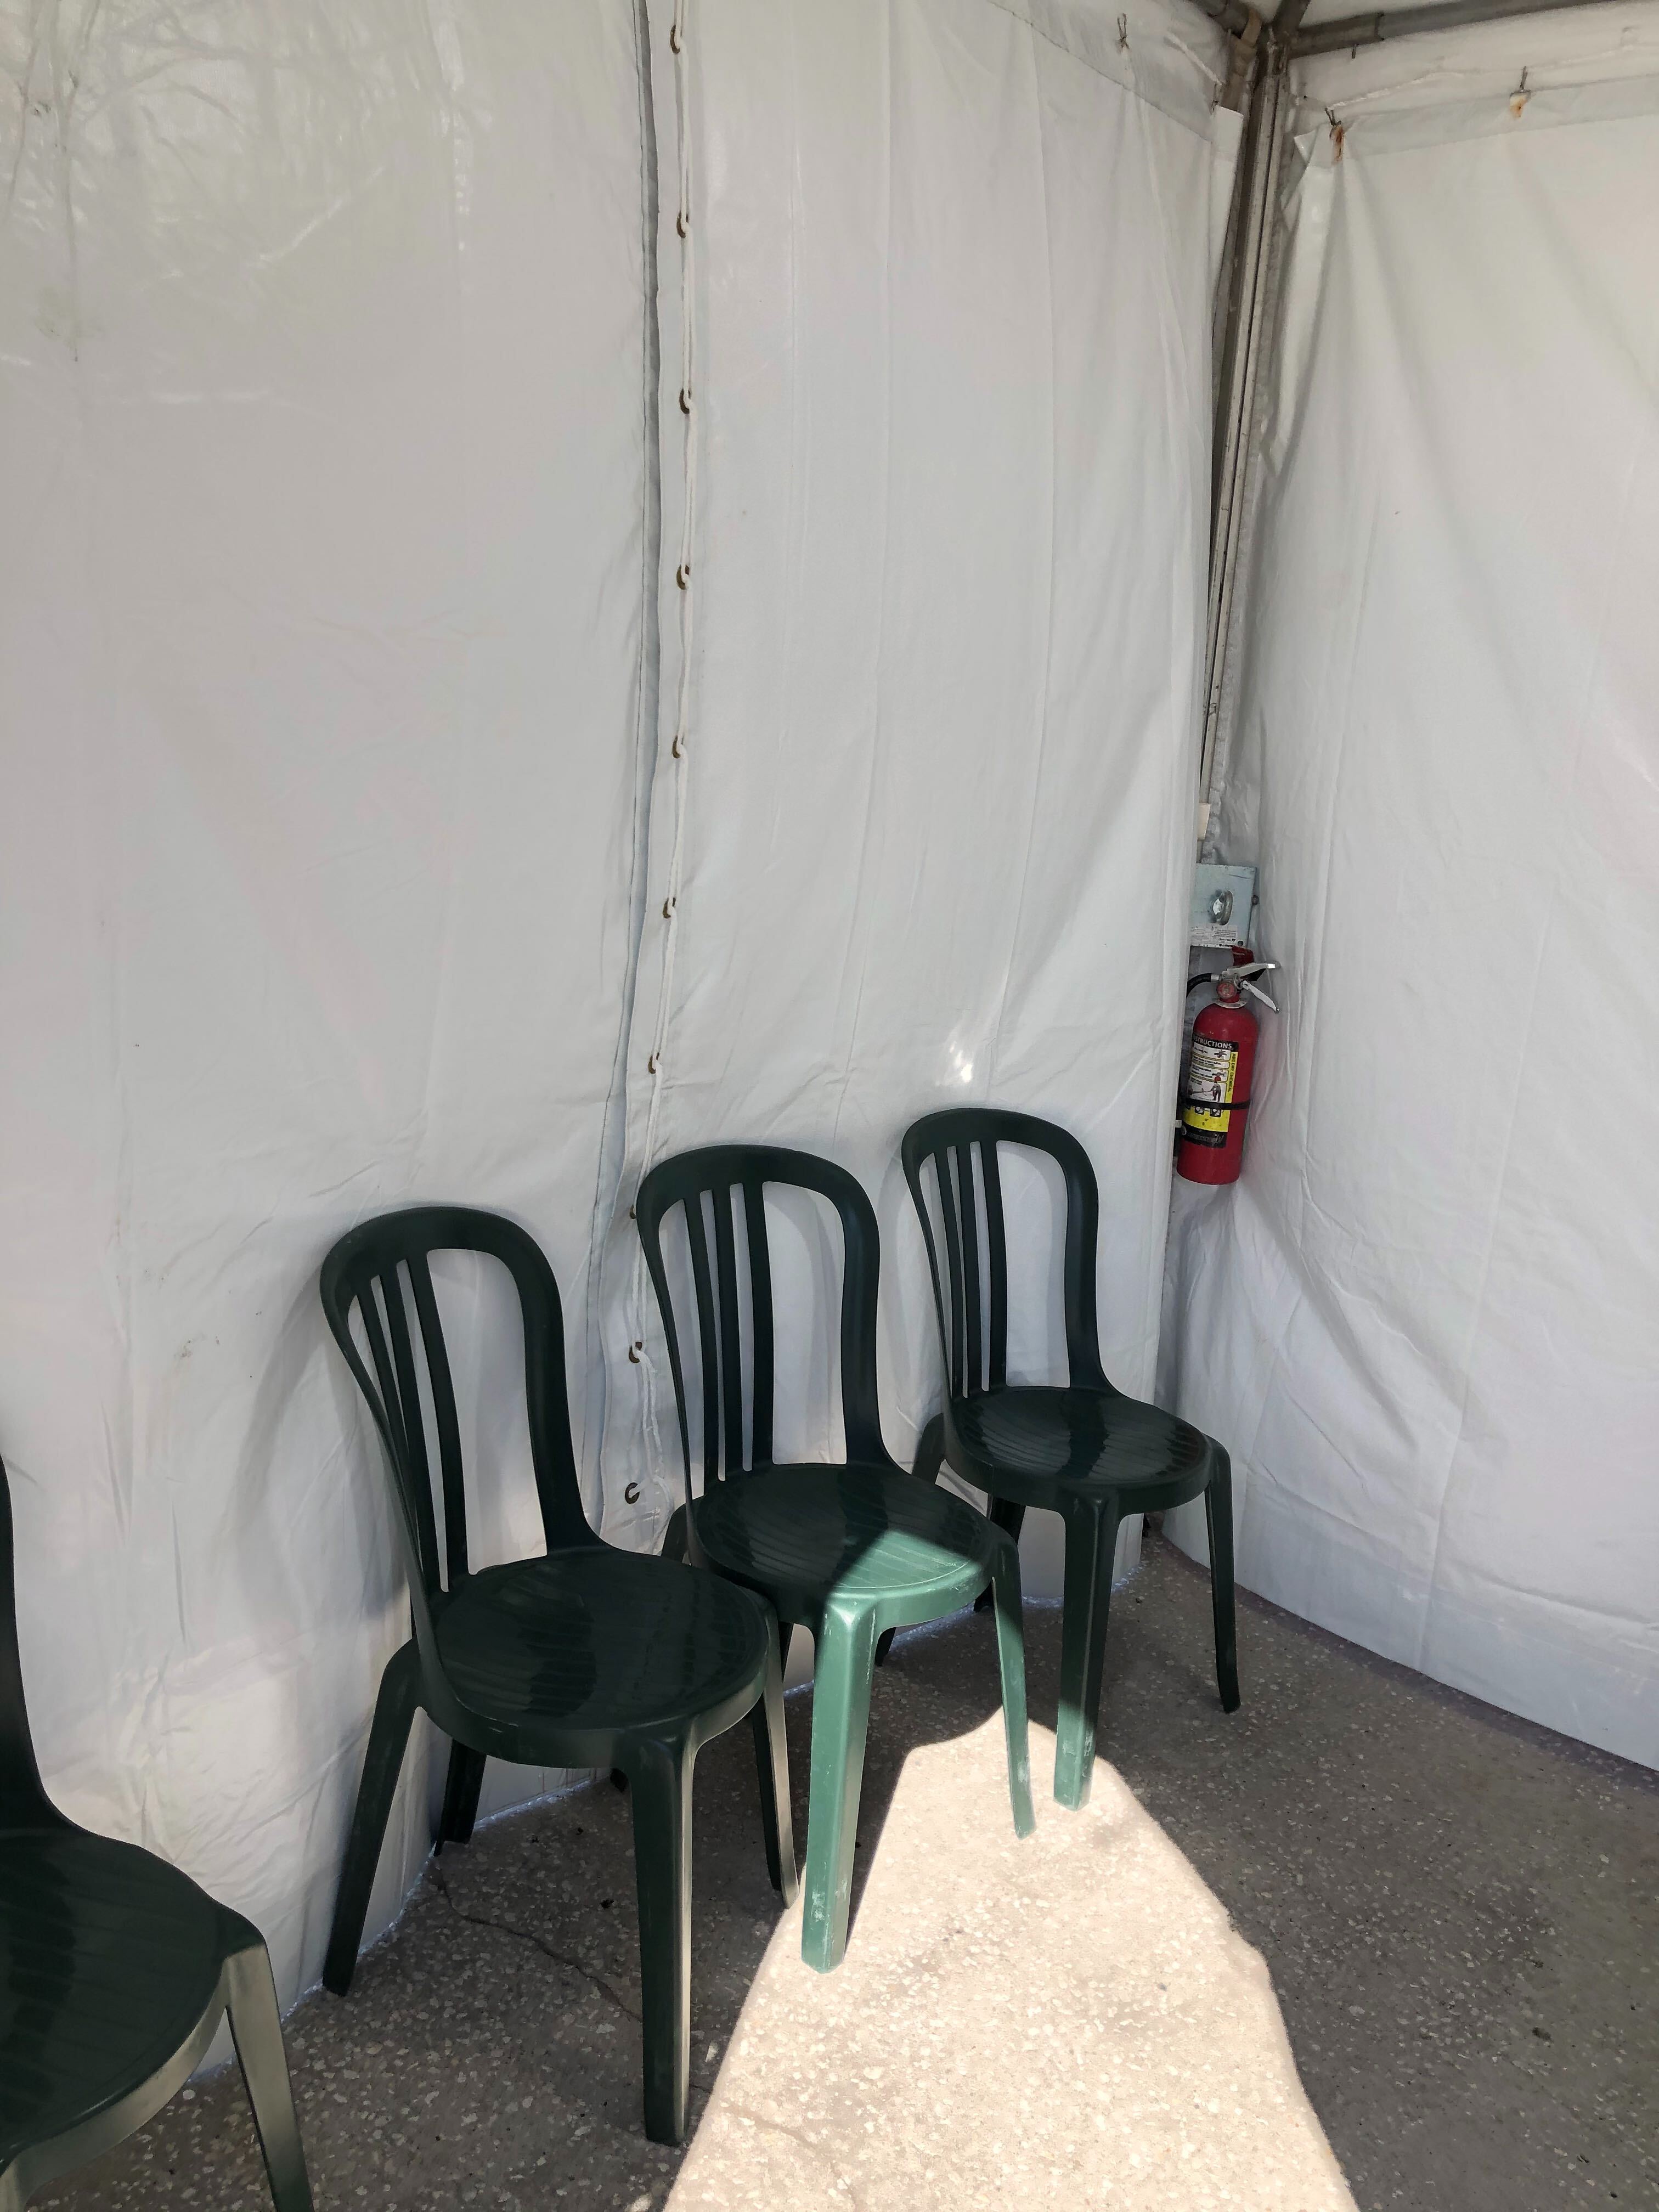 marketplace disney springs tent screening reopening may 20 6